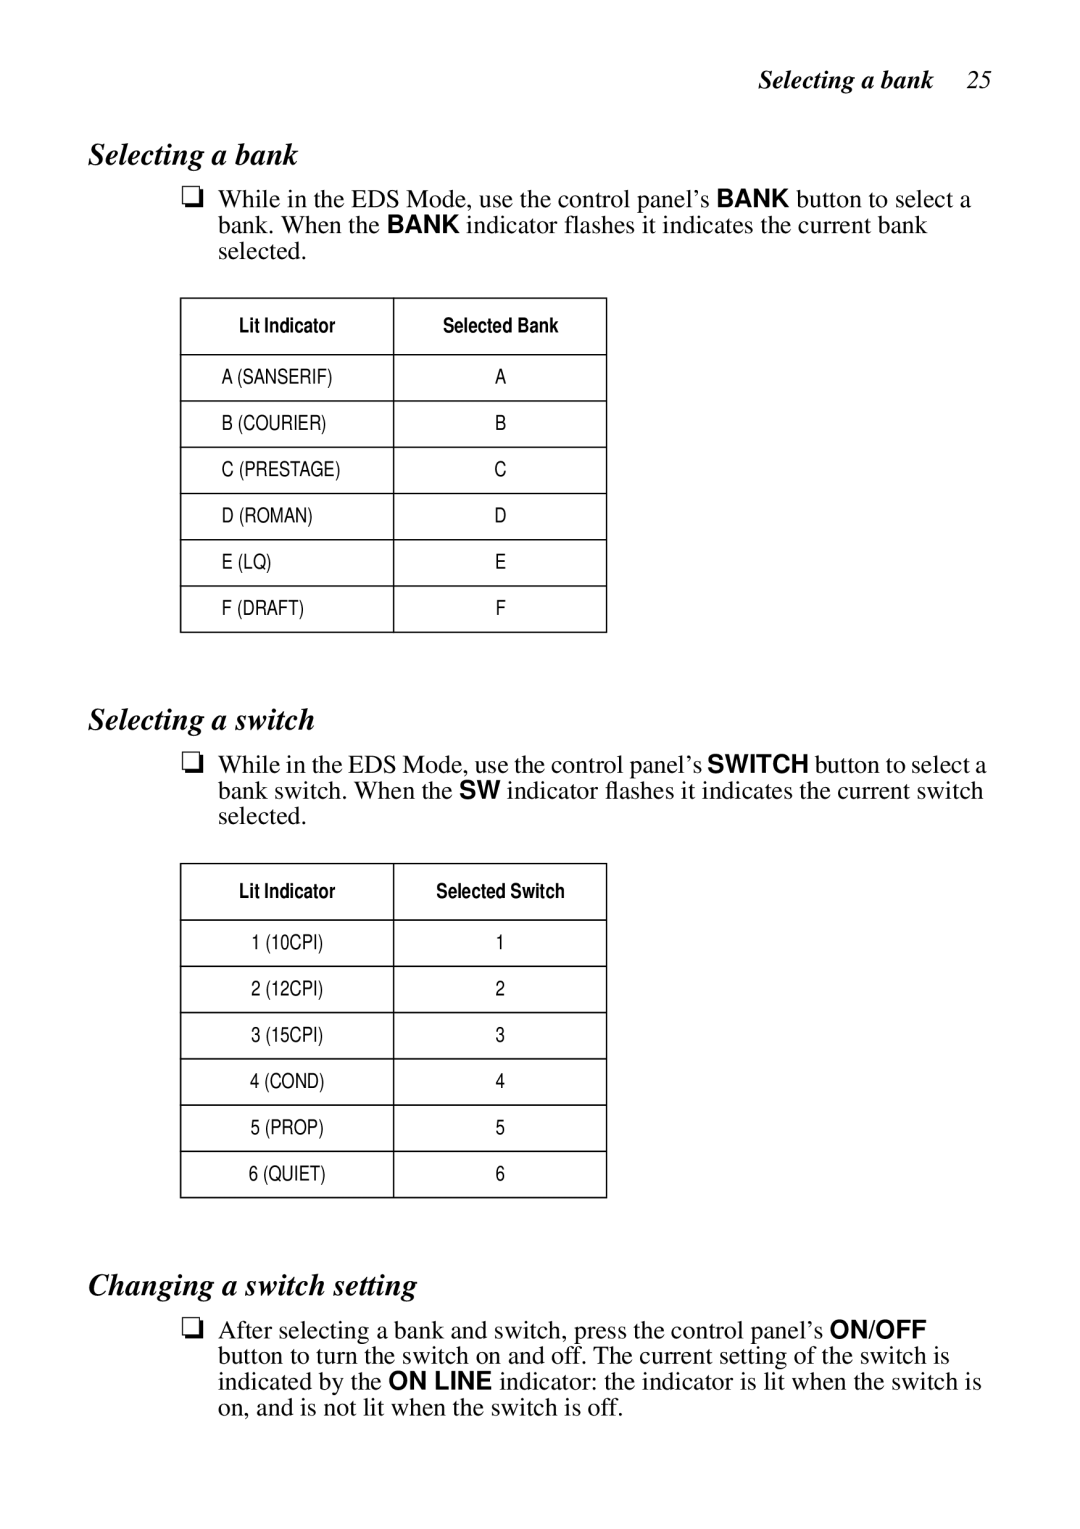 Star Micronics XB24-250 II user manual Selecting a bank, Selecting a switch, Changing a switch setting 